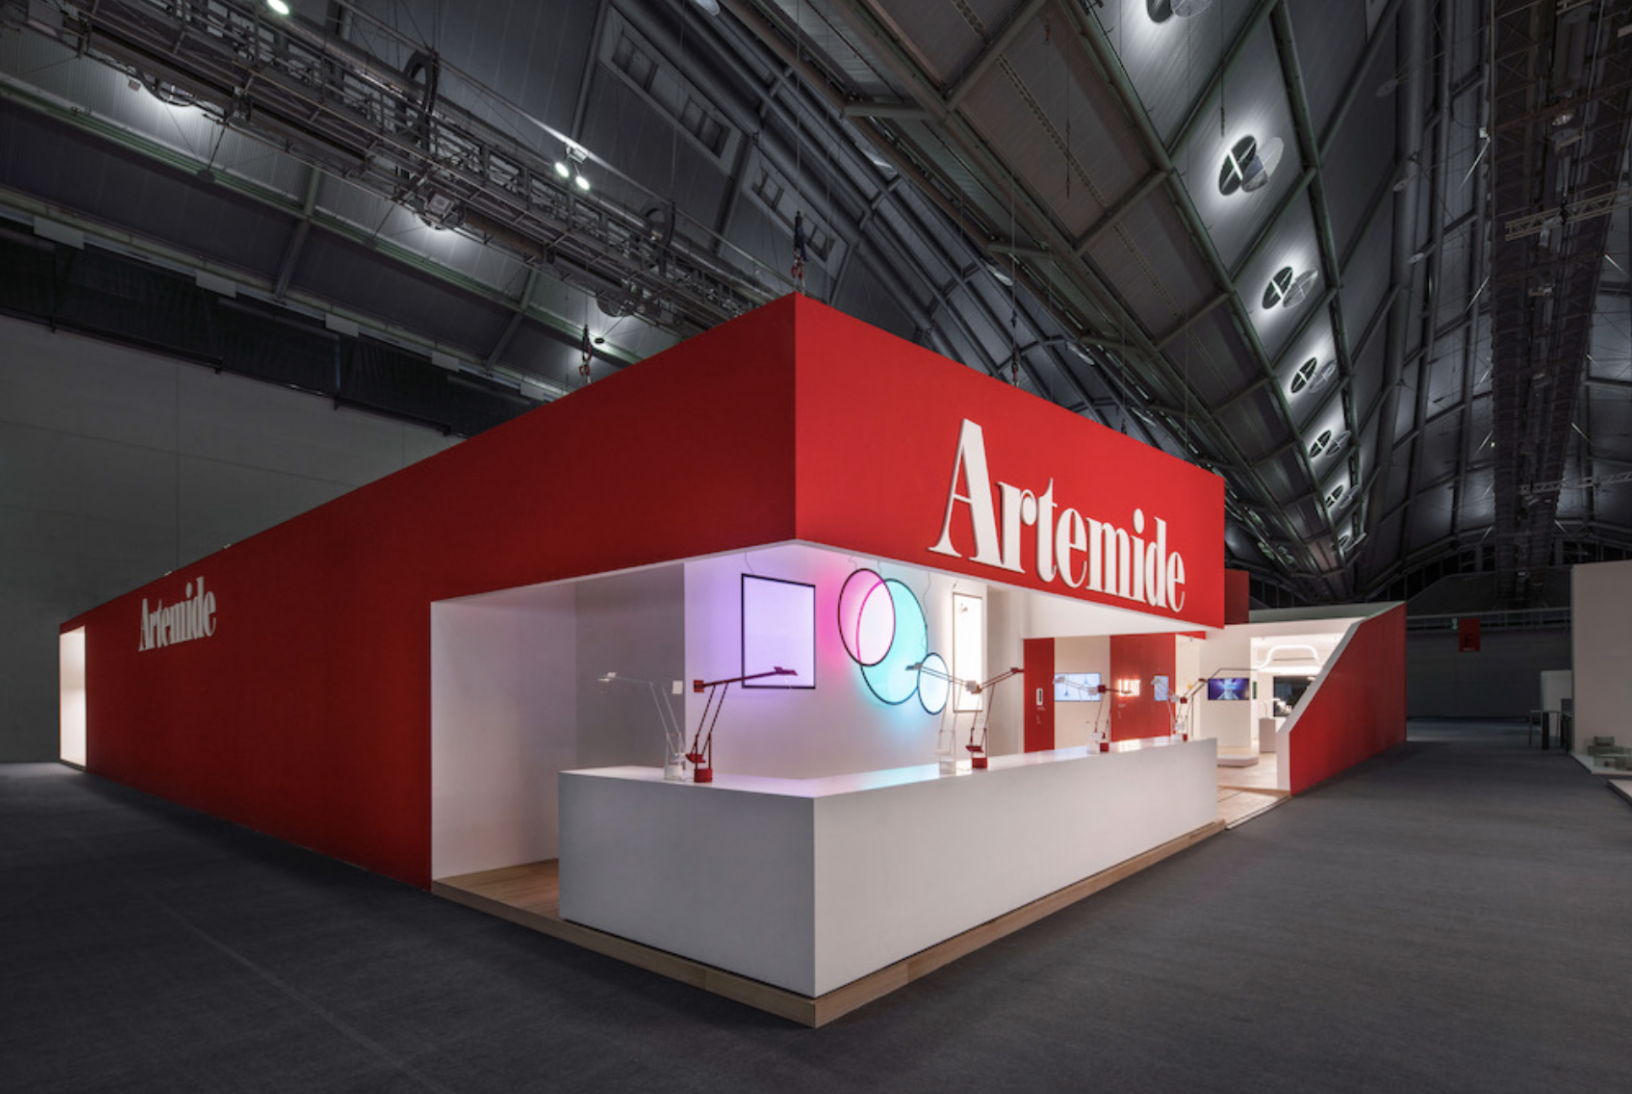 Artemide’s booth at Light+Building